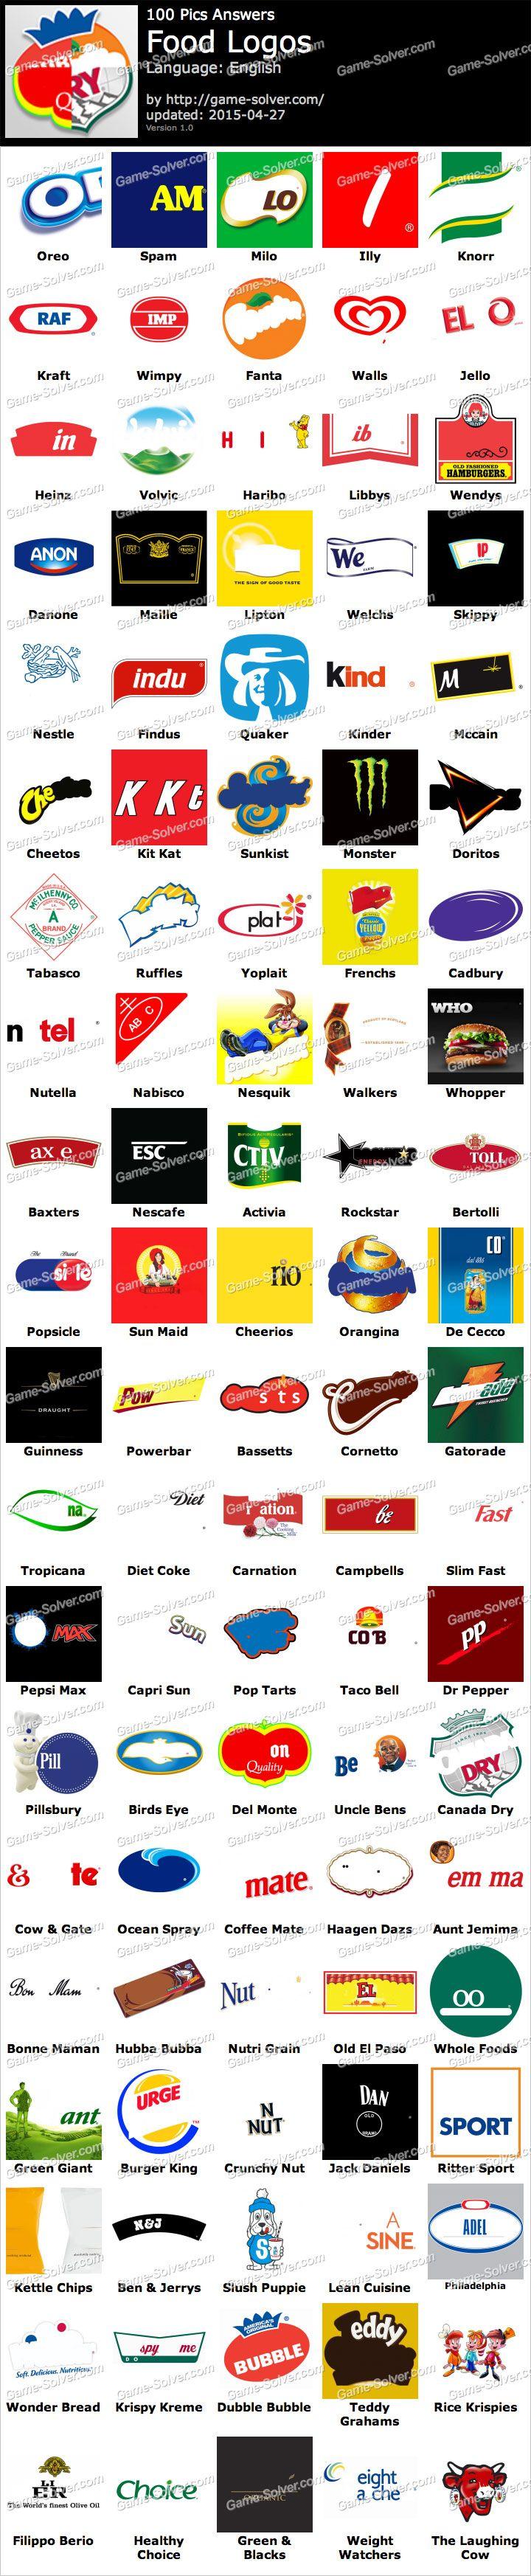 100 Pics Answers Logo - 100 Pics Food Logos - Game Solver